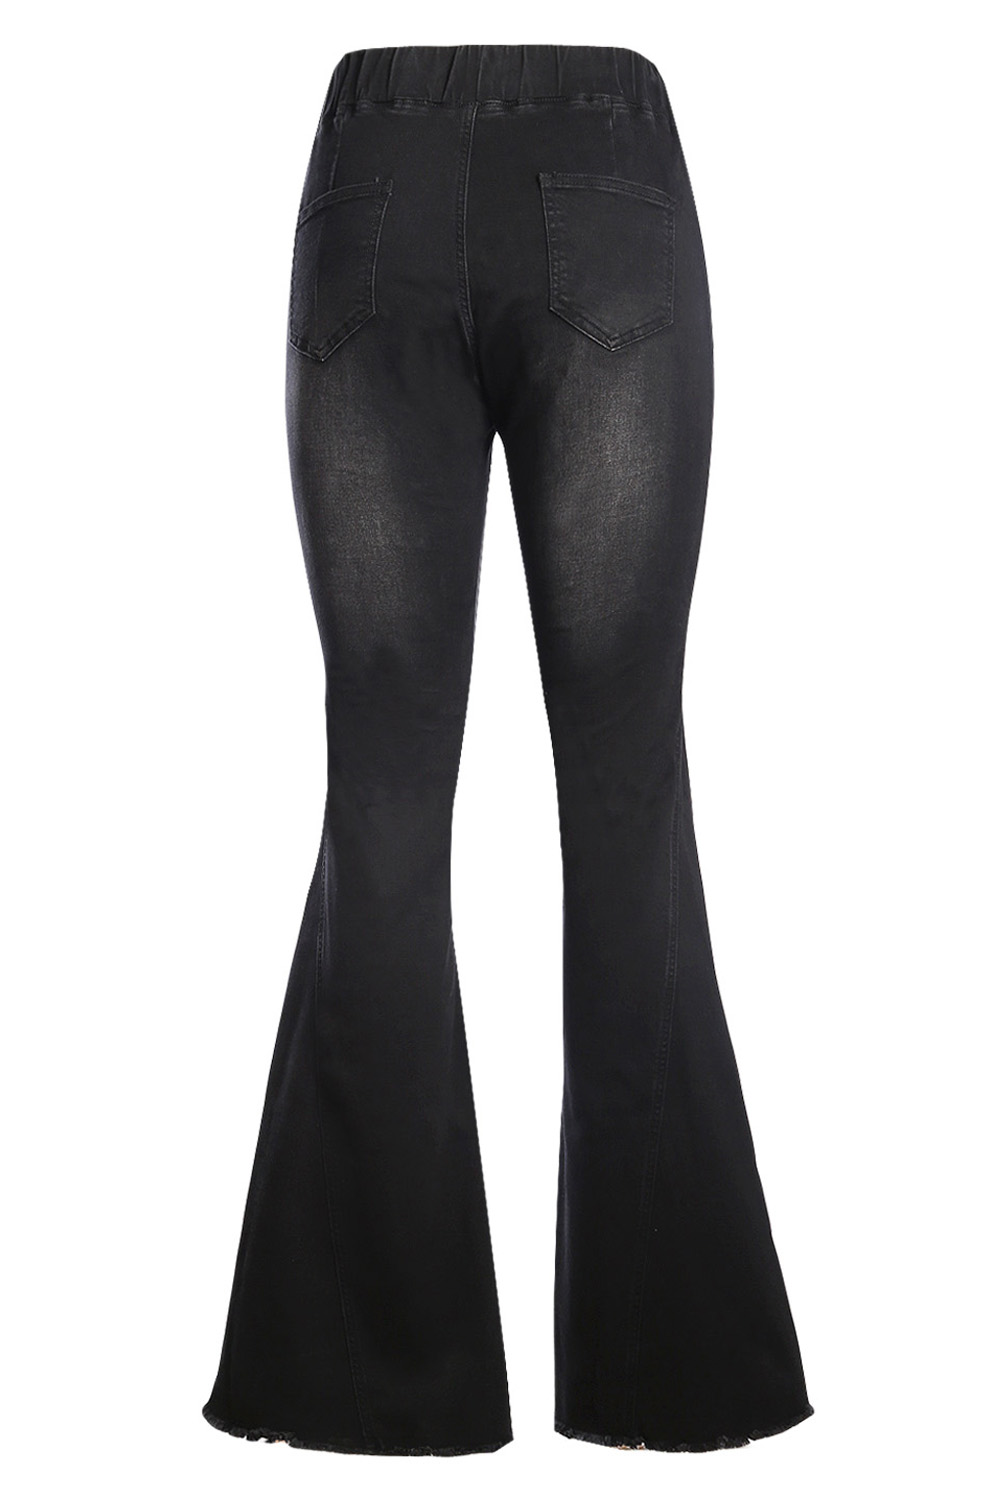 Fashionable Black Distressed Bell Bottom Denim Pants